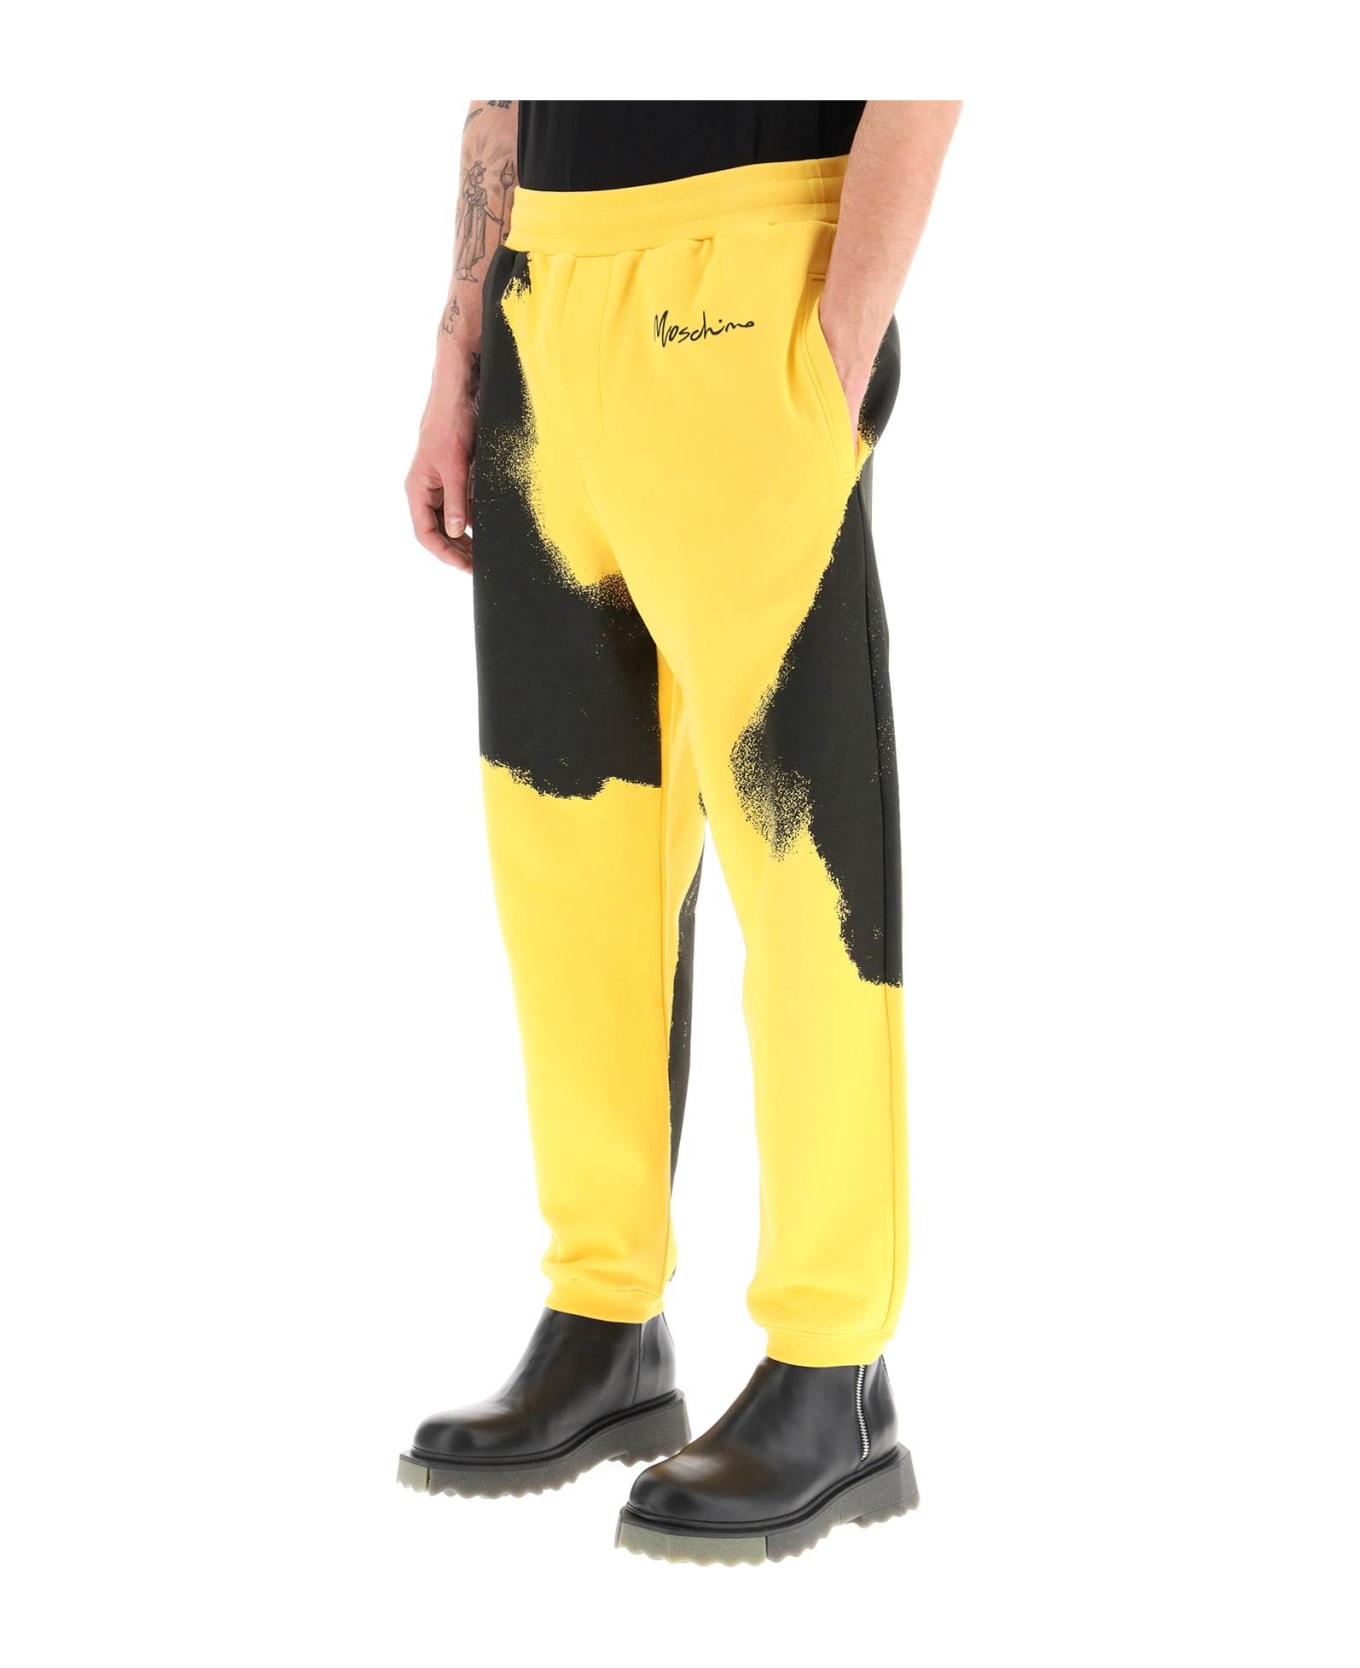 Moschino Graphic Print Jogger Pants With Logo - FANTASIA GIALLO (Yellow)